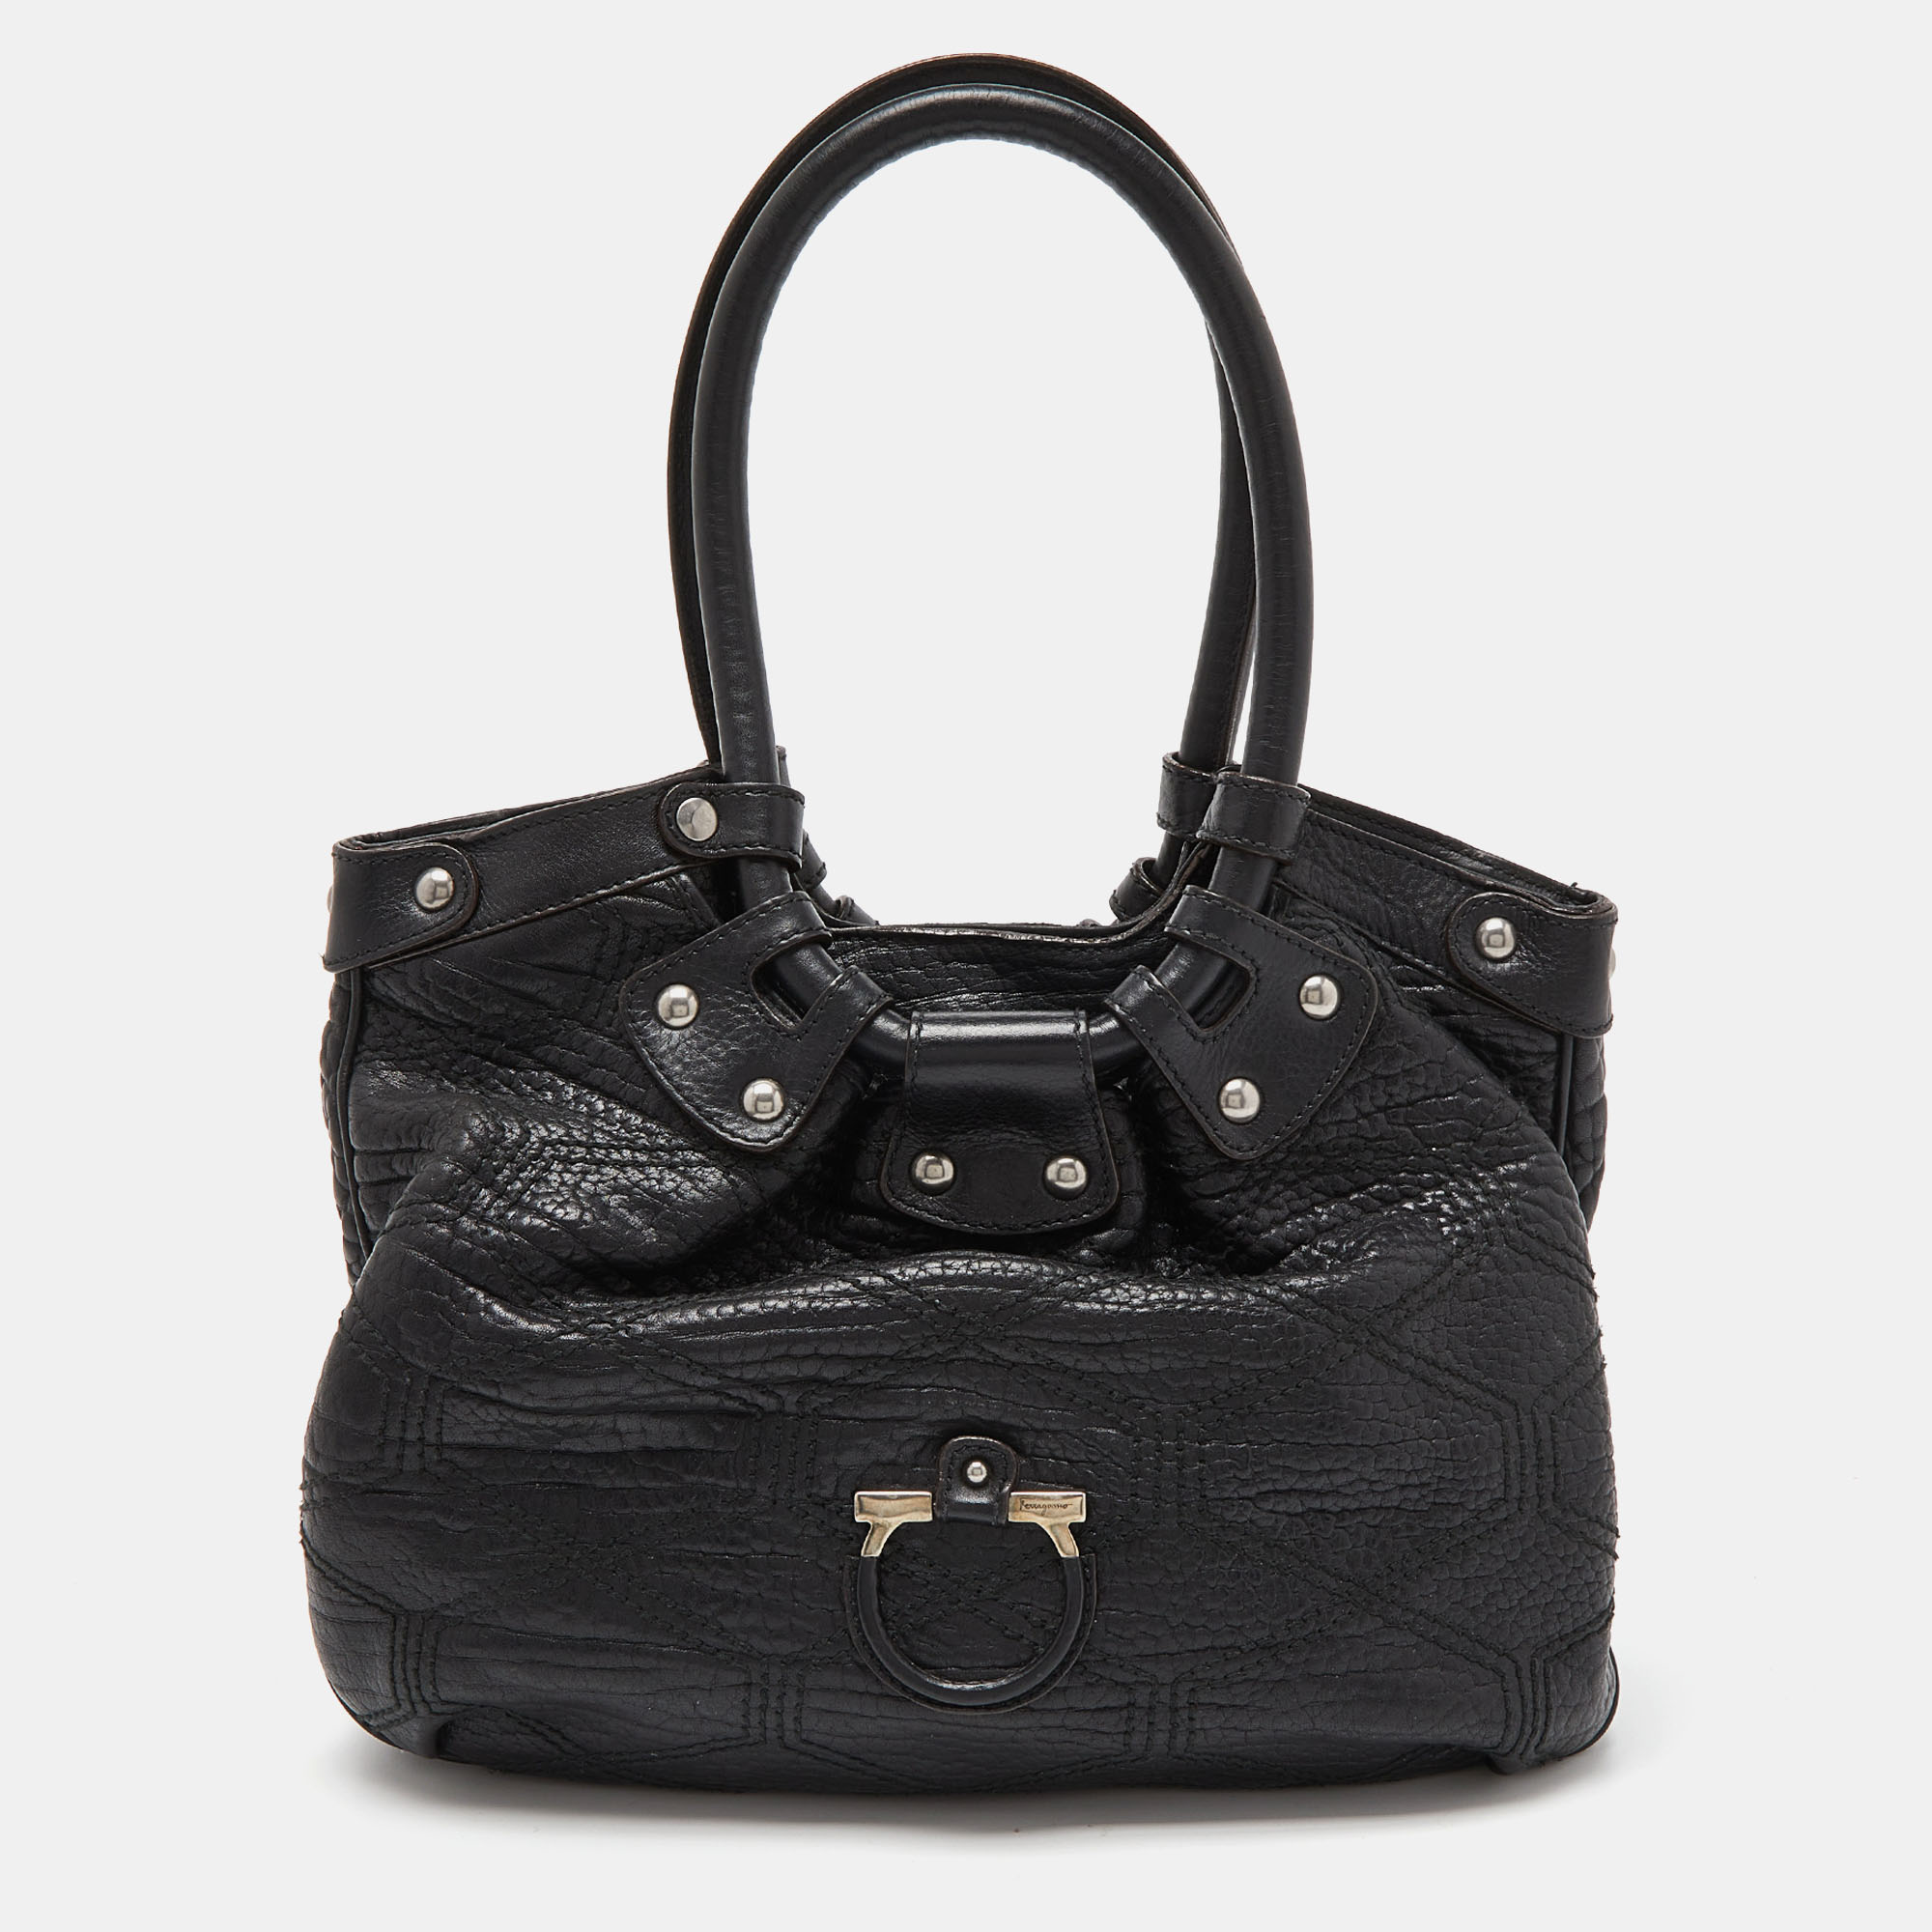 Salvatore Ferragamo Black Leather Shoulder Bag